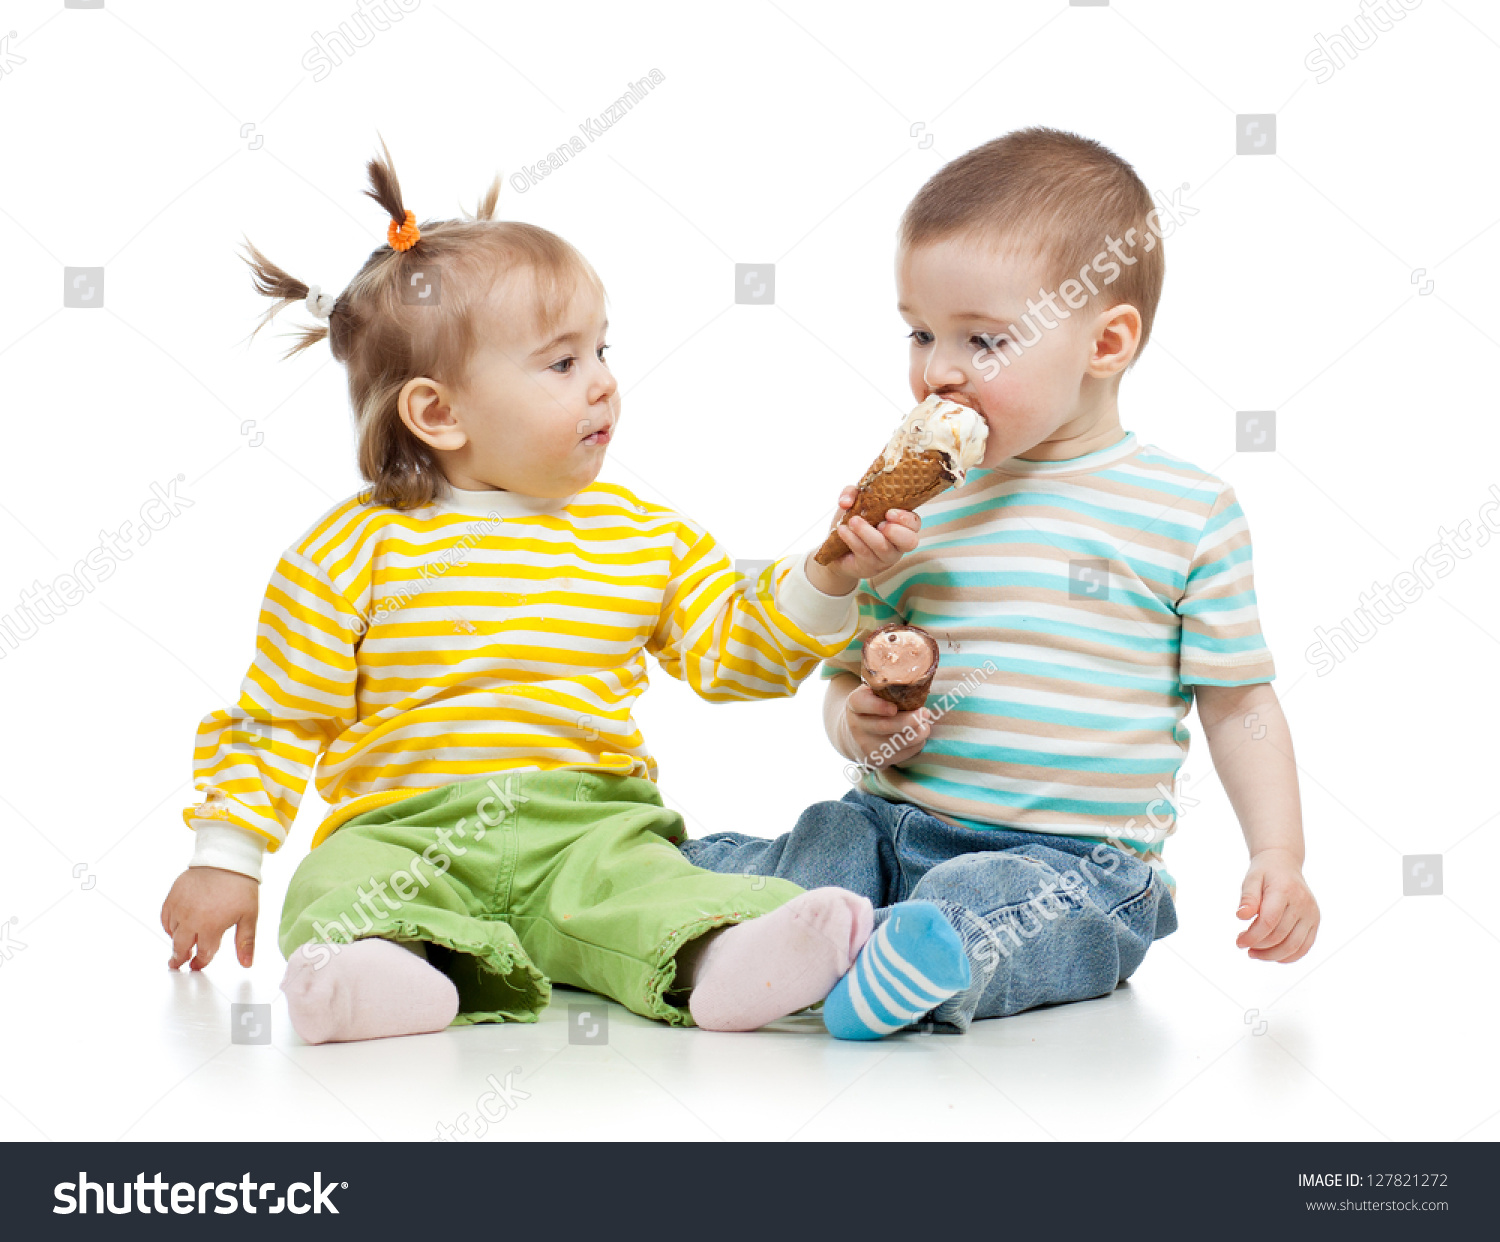 cute babies eating ice creamphoto